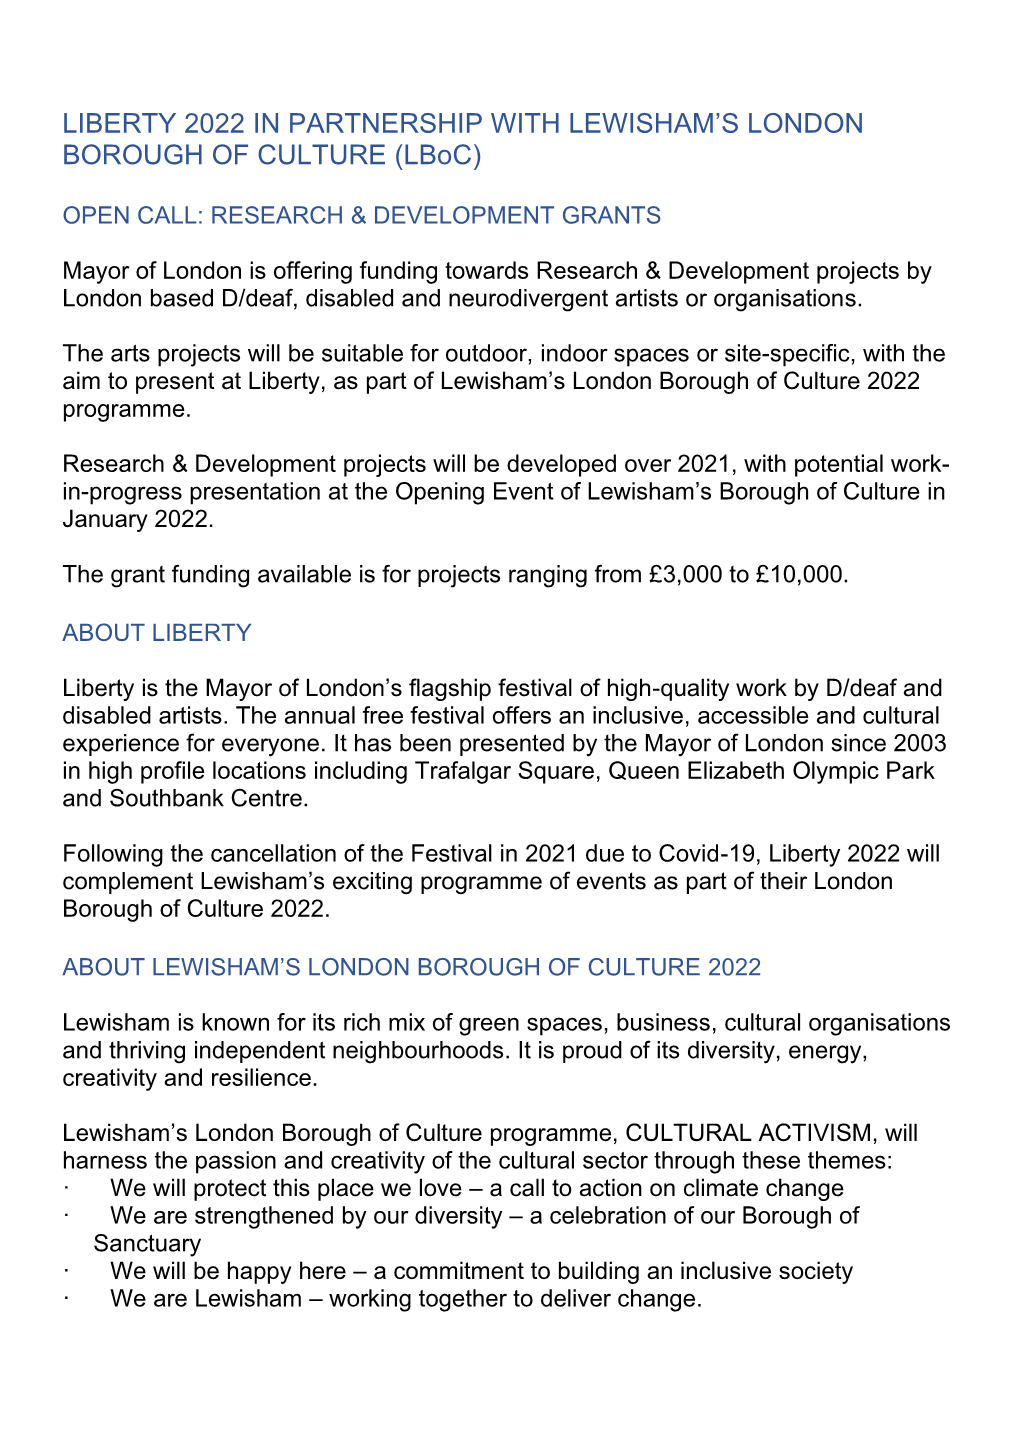 LIBERTY 2022 in PARTNERSHIP with LEWISHAM's LONDON BOROUGH of CULTURE (Lboc)